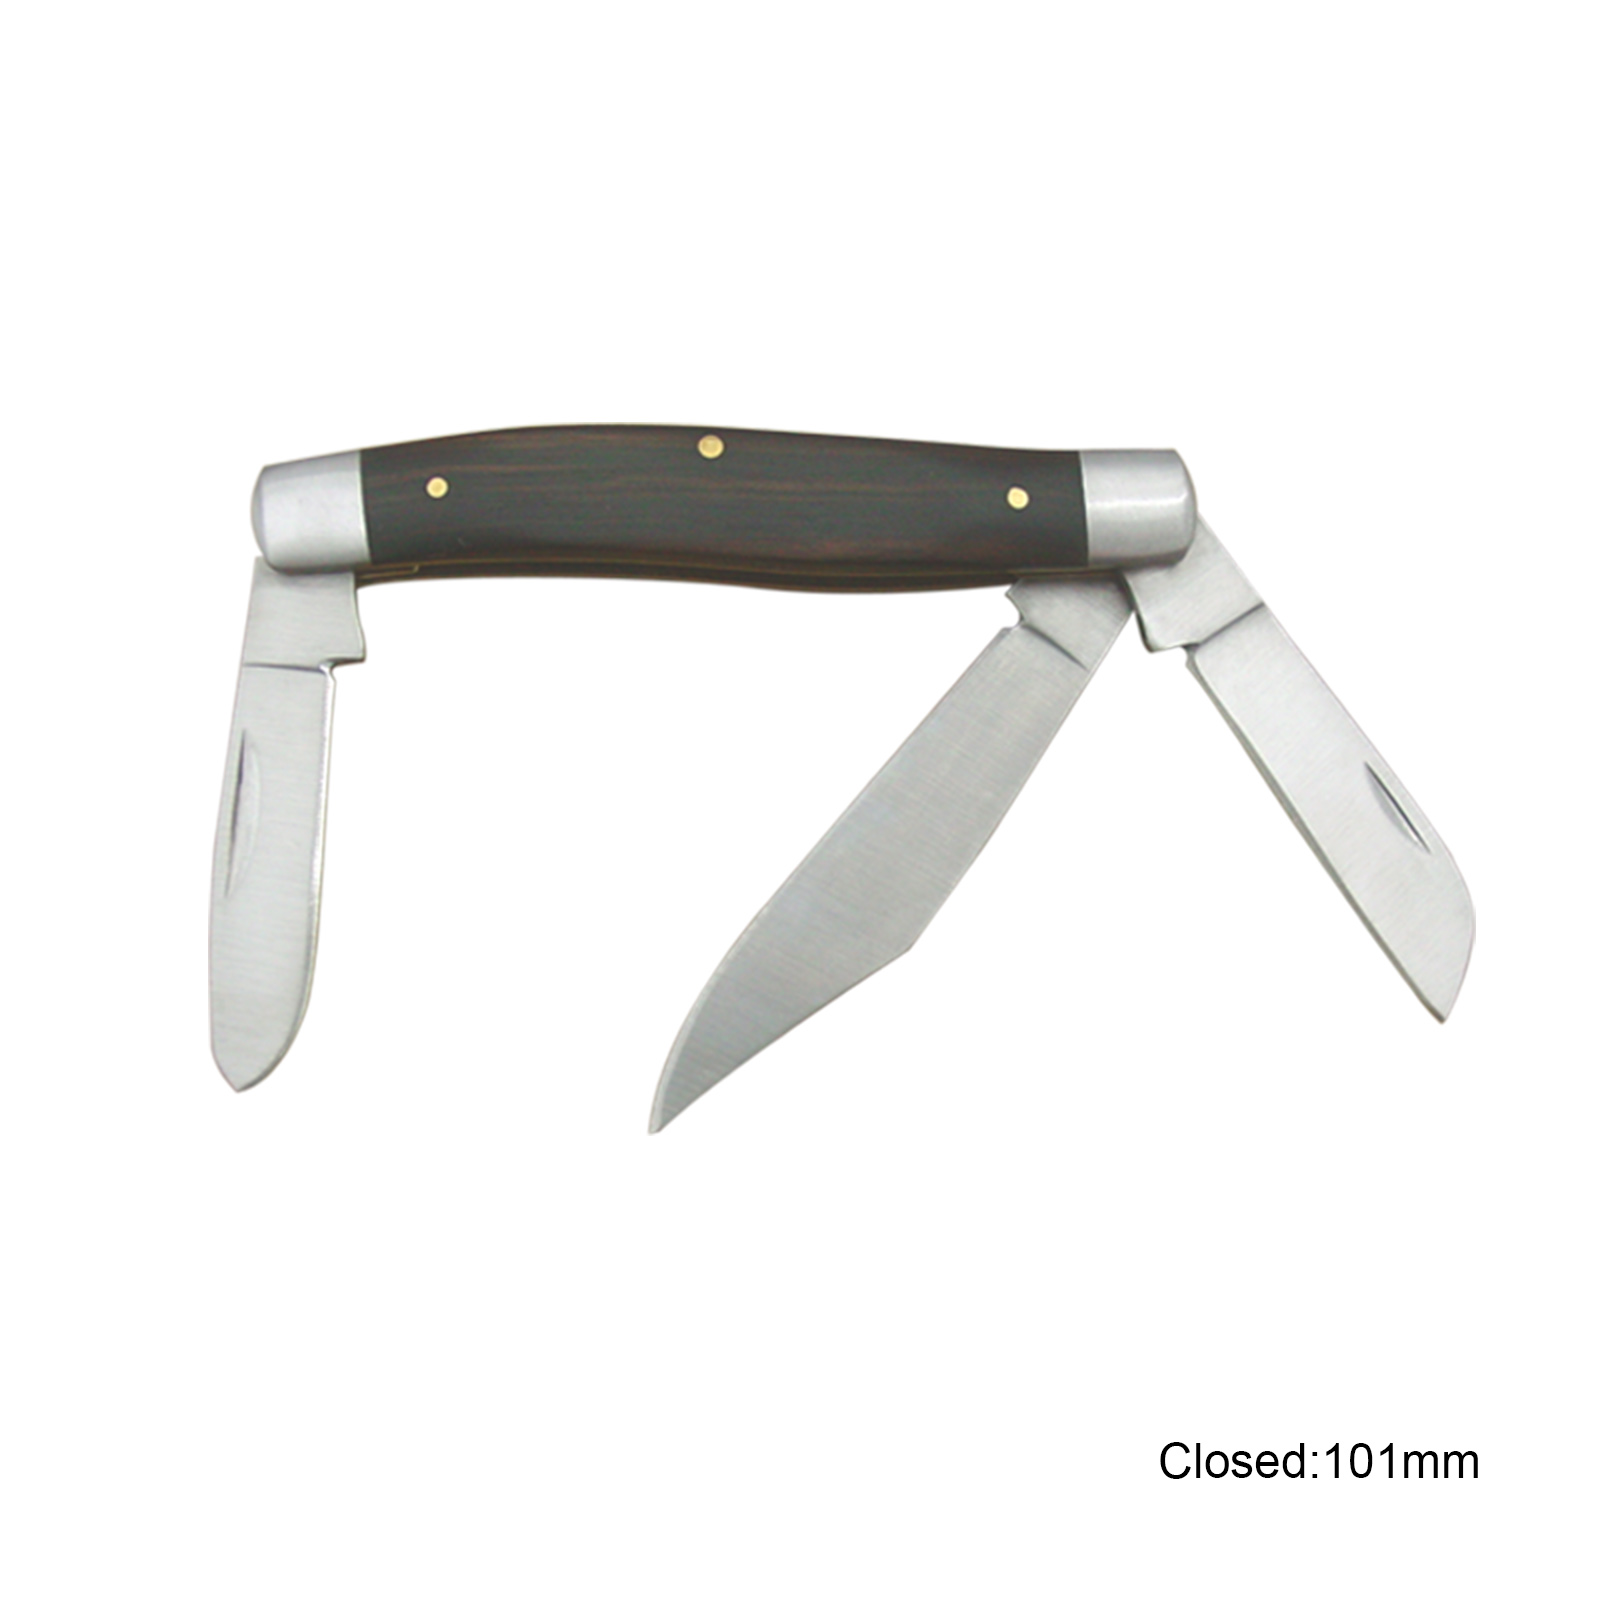 #667 Utility Pocket Knife Tools